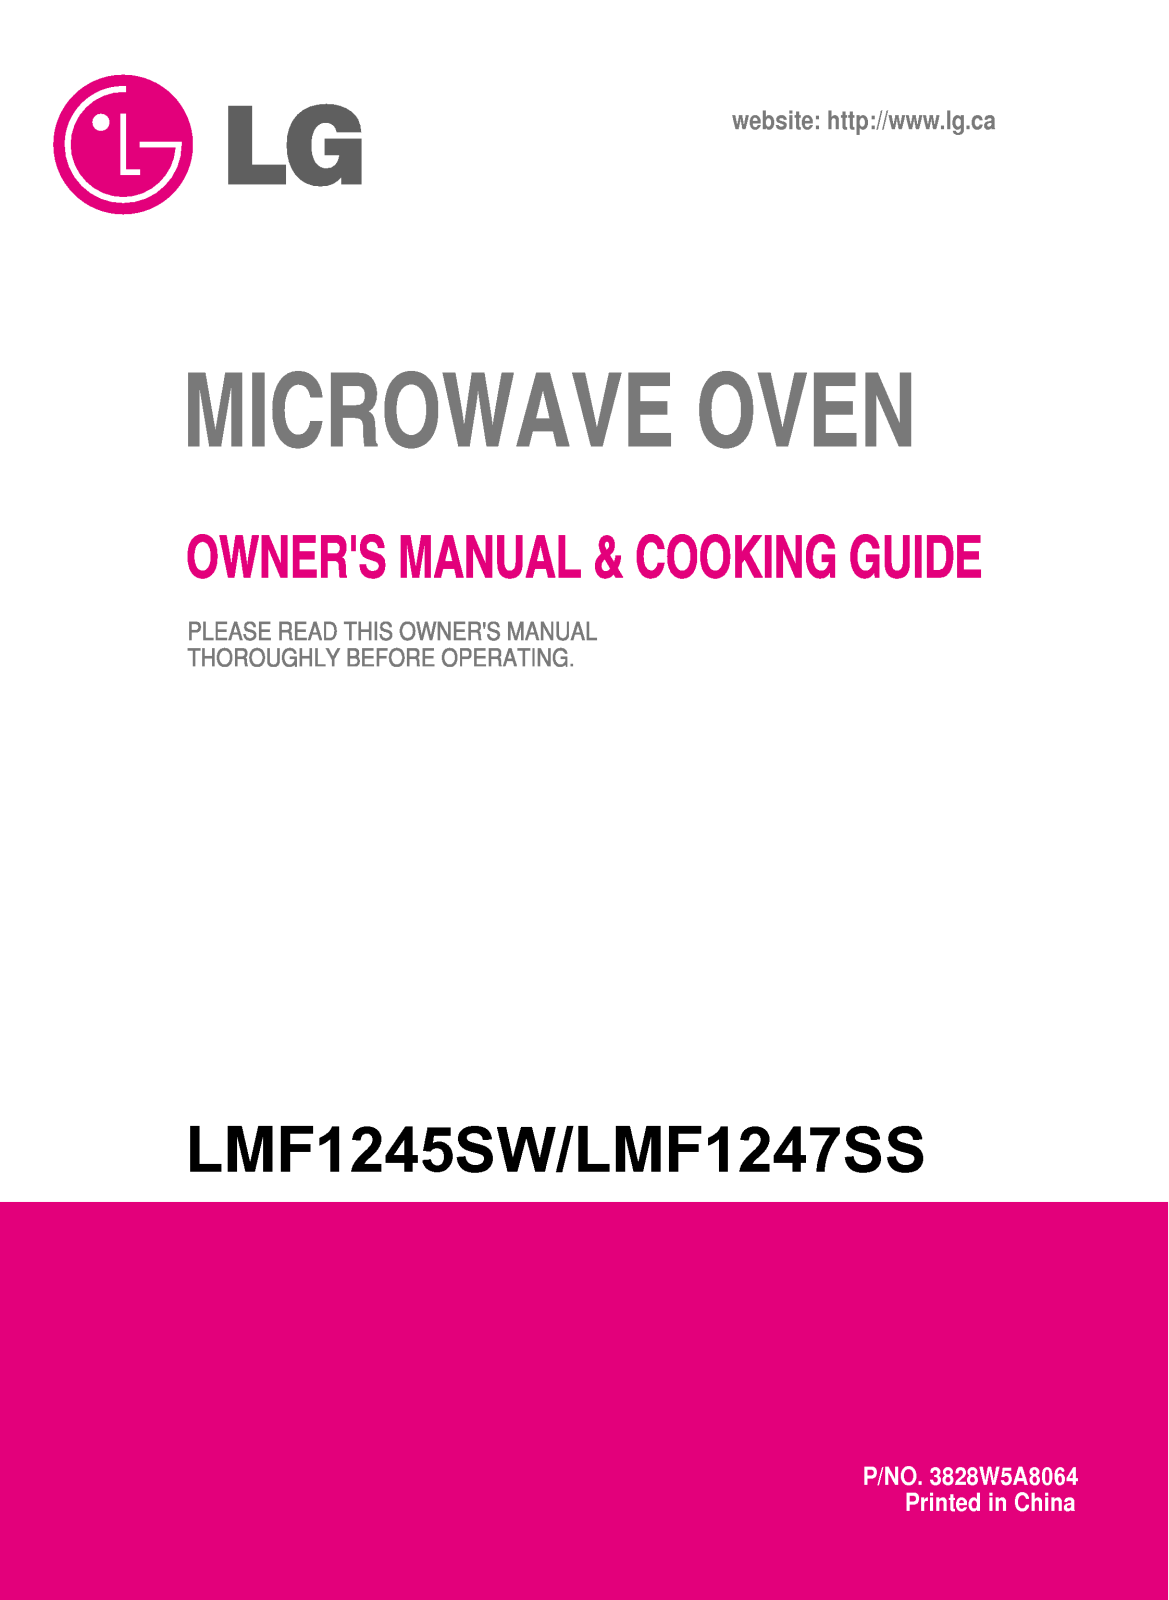 LG LMF1247SS, LMF1245SW User Manual